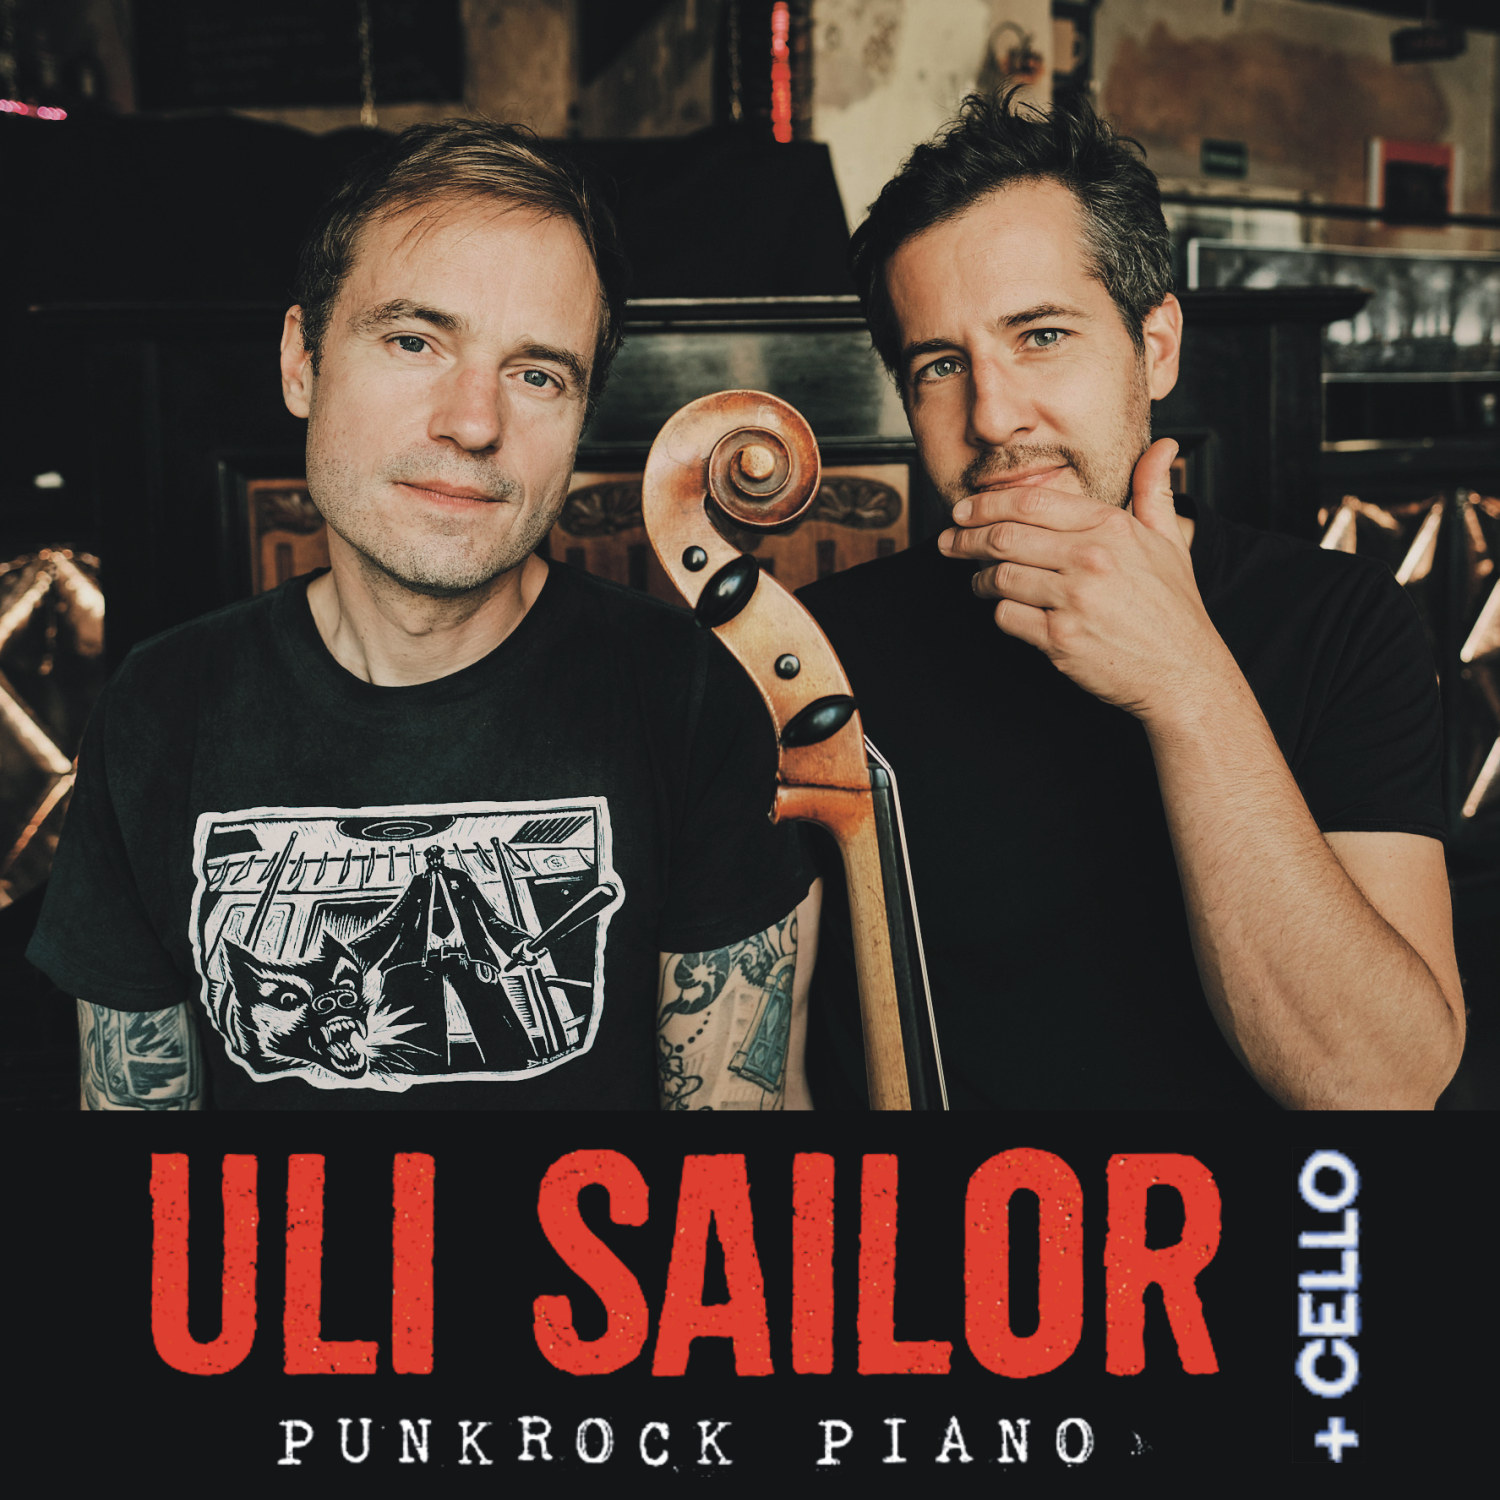 ULI SAILOR Punkrock Piano + Cello | Punk-Songs mit Klavier und Cello-Begleitung